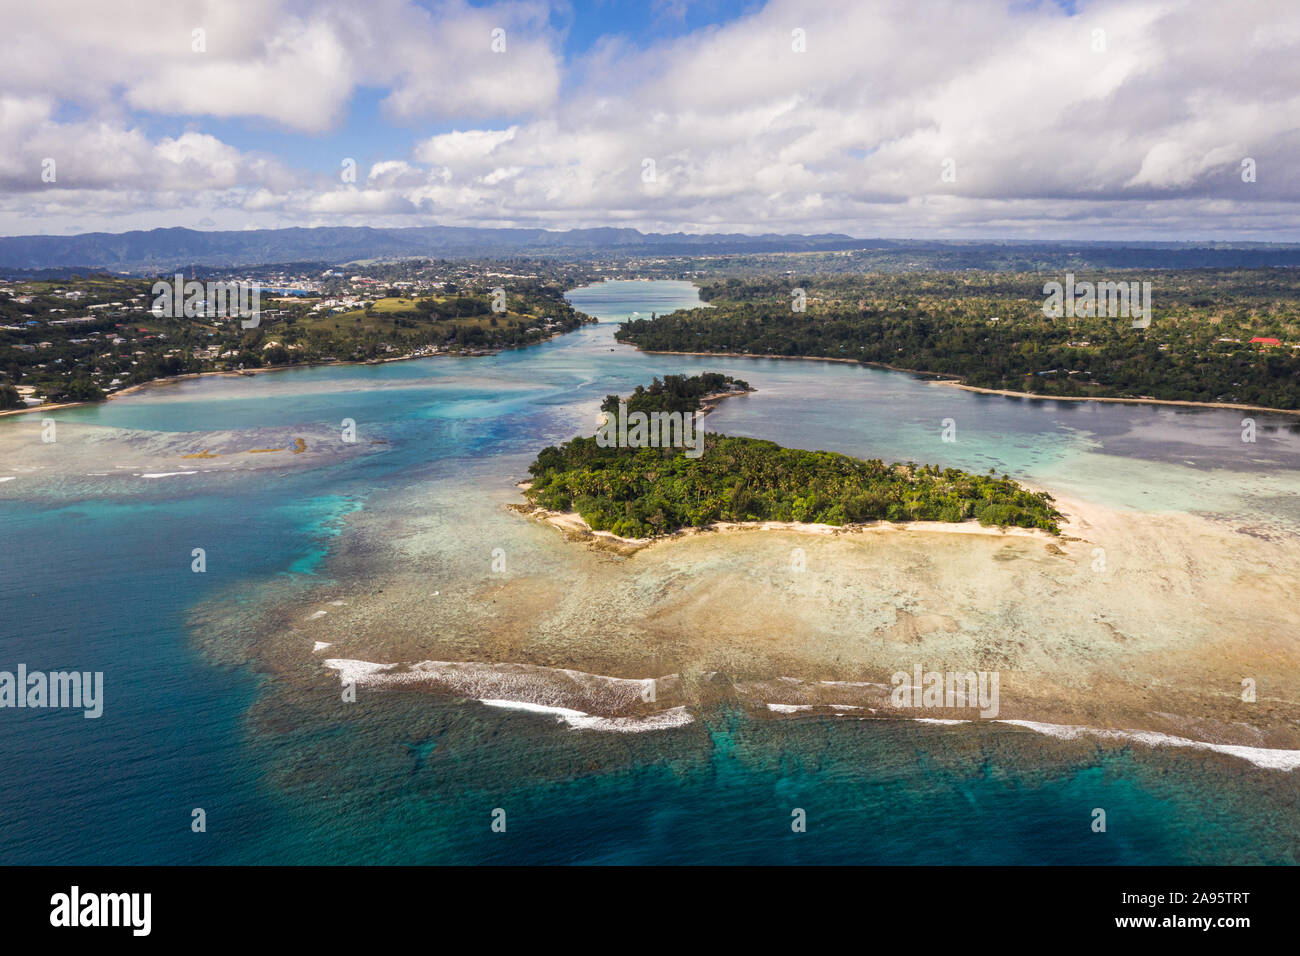 Aerial view of the Iririki island in the Port Vila lagoon in Vanuatu in the south Pacific Stock Photo